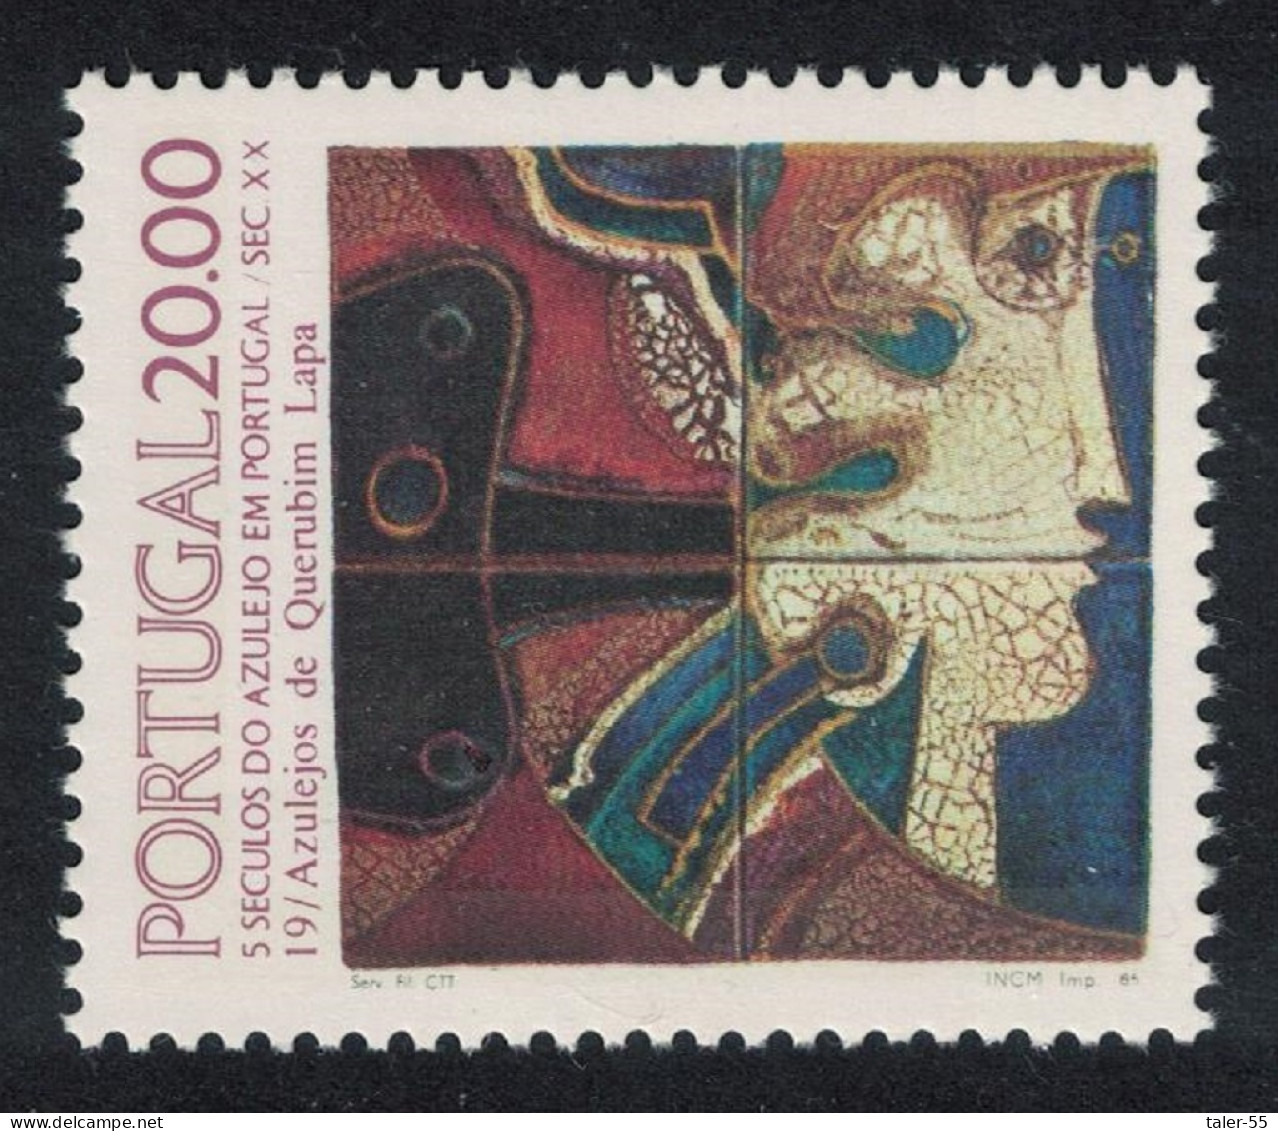 Portugal Tiles 19th Series 1985 MNH SG#2020 - Ongebruikt